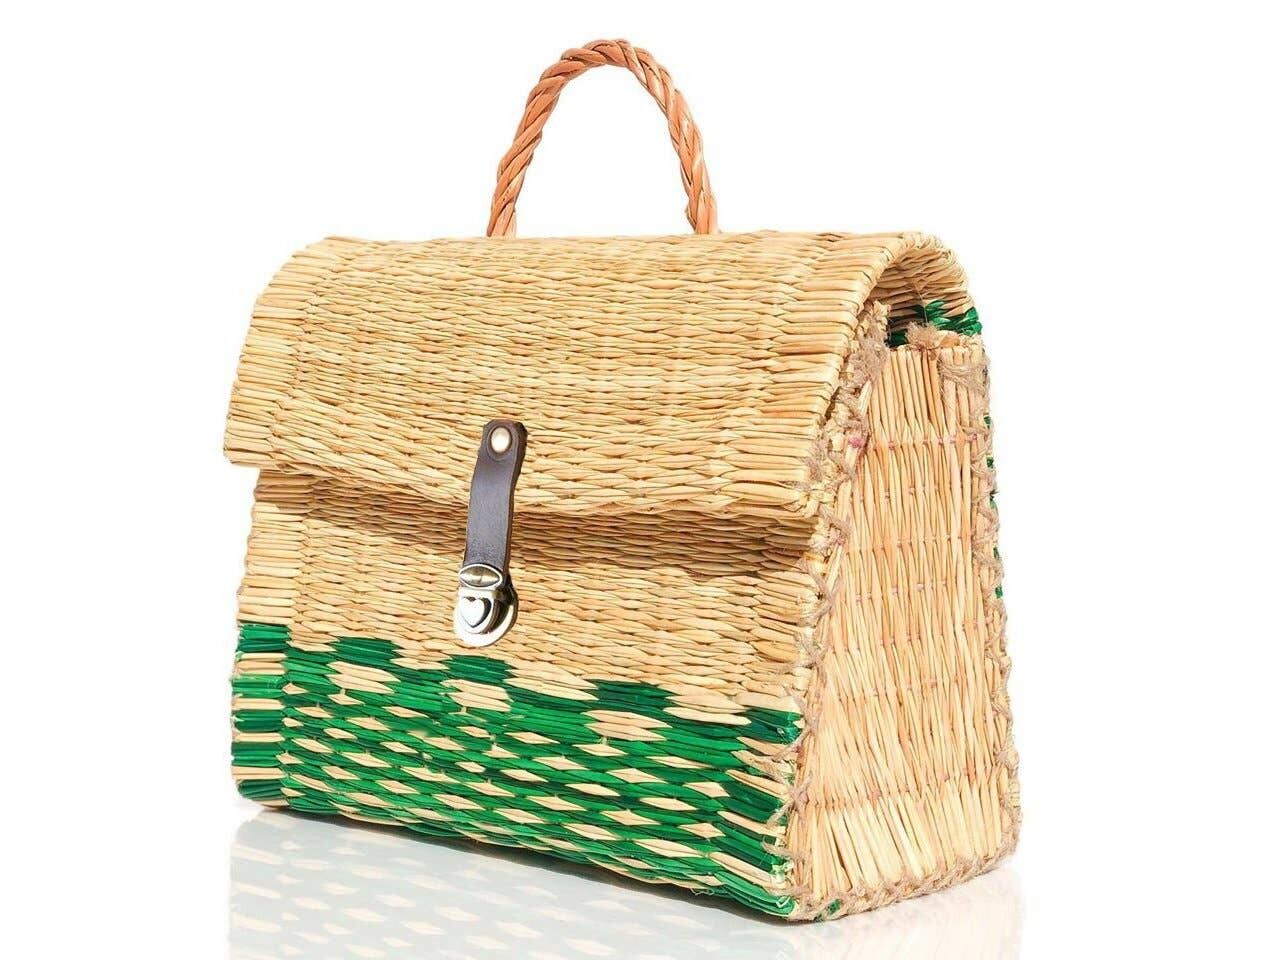 Wholesaleghanaian Handwoven Market Basket/6 Assorted Pieces of Woven Market Basket  Bag With Handles, Shopping and Grocery Bag, Beach Bag - Etsy